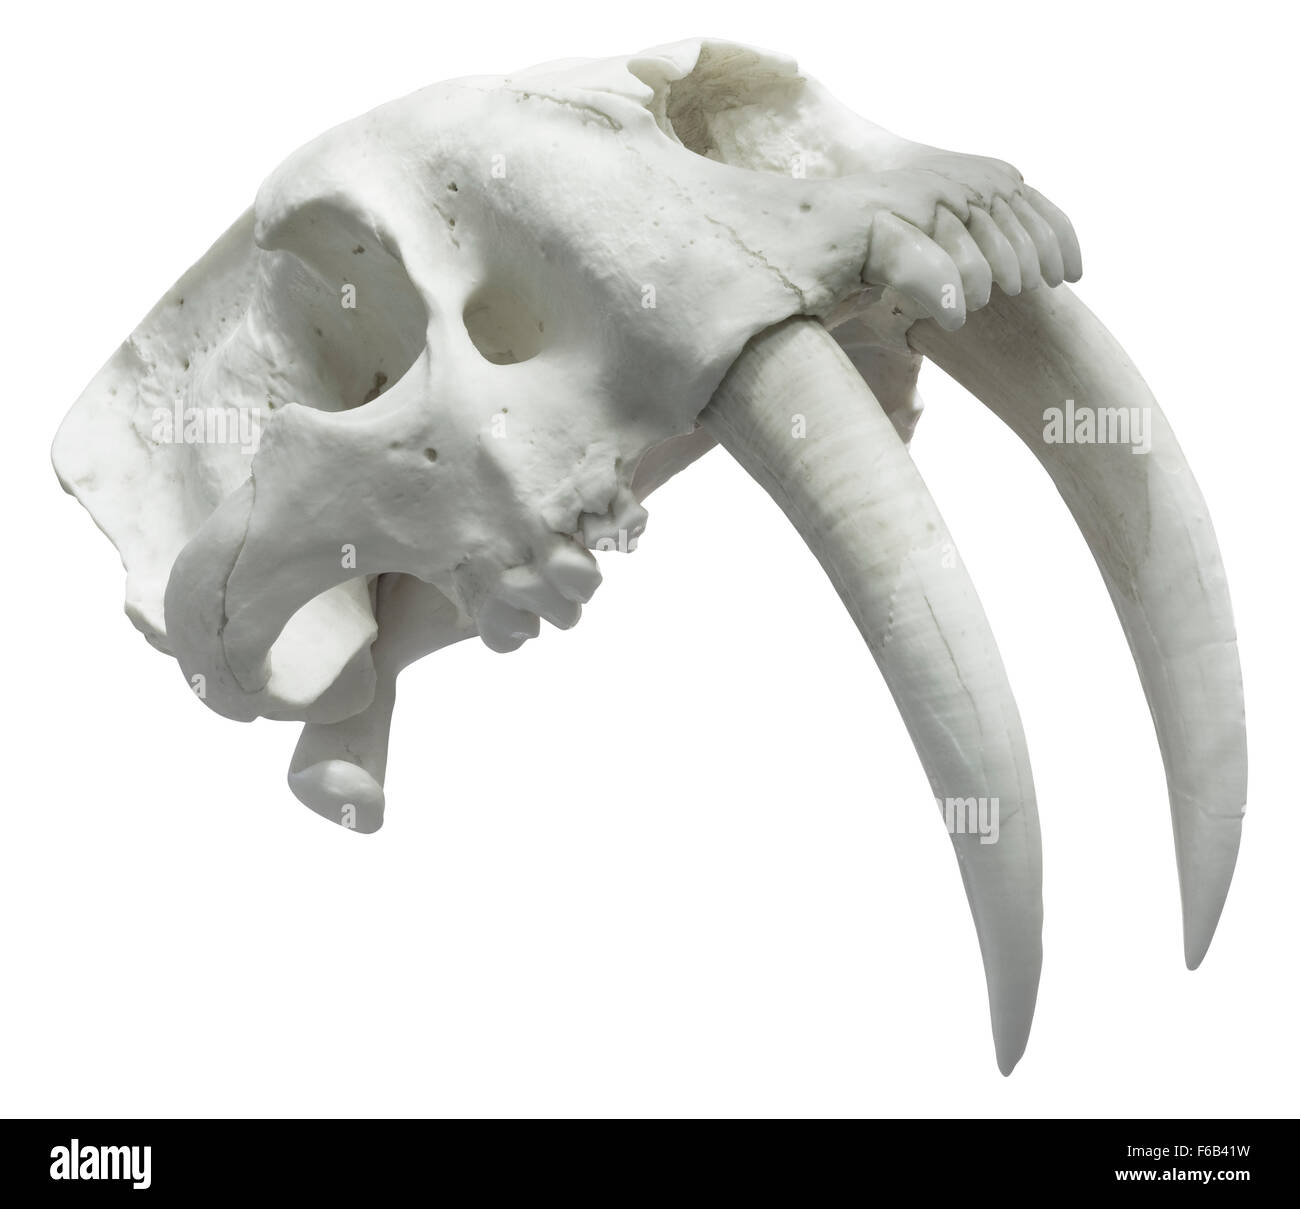 saber tooth tiger skull side view